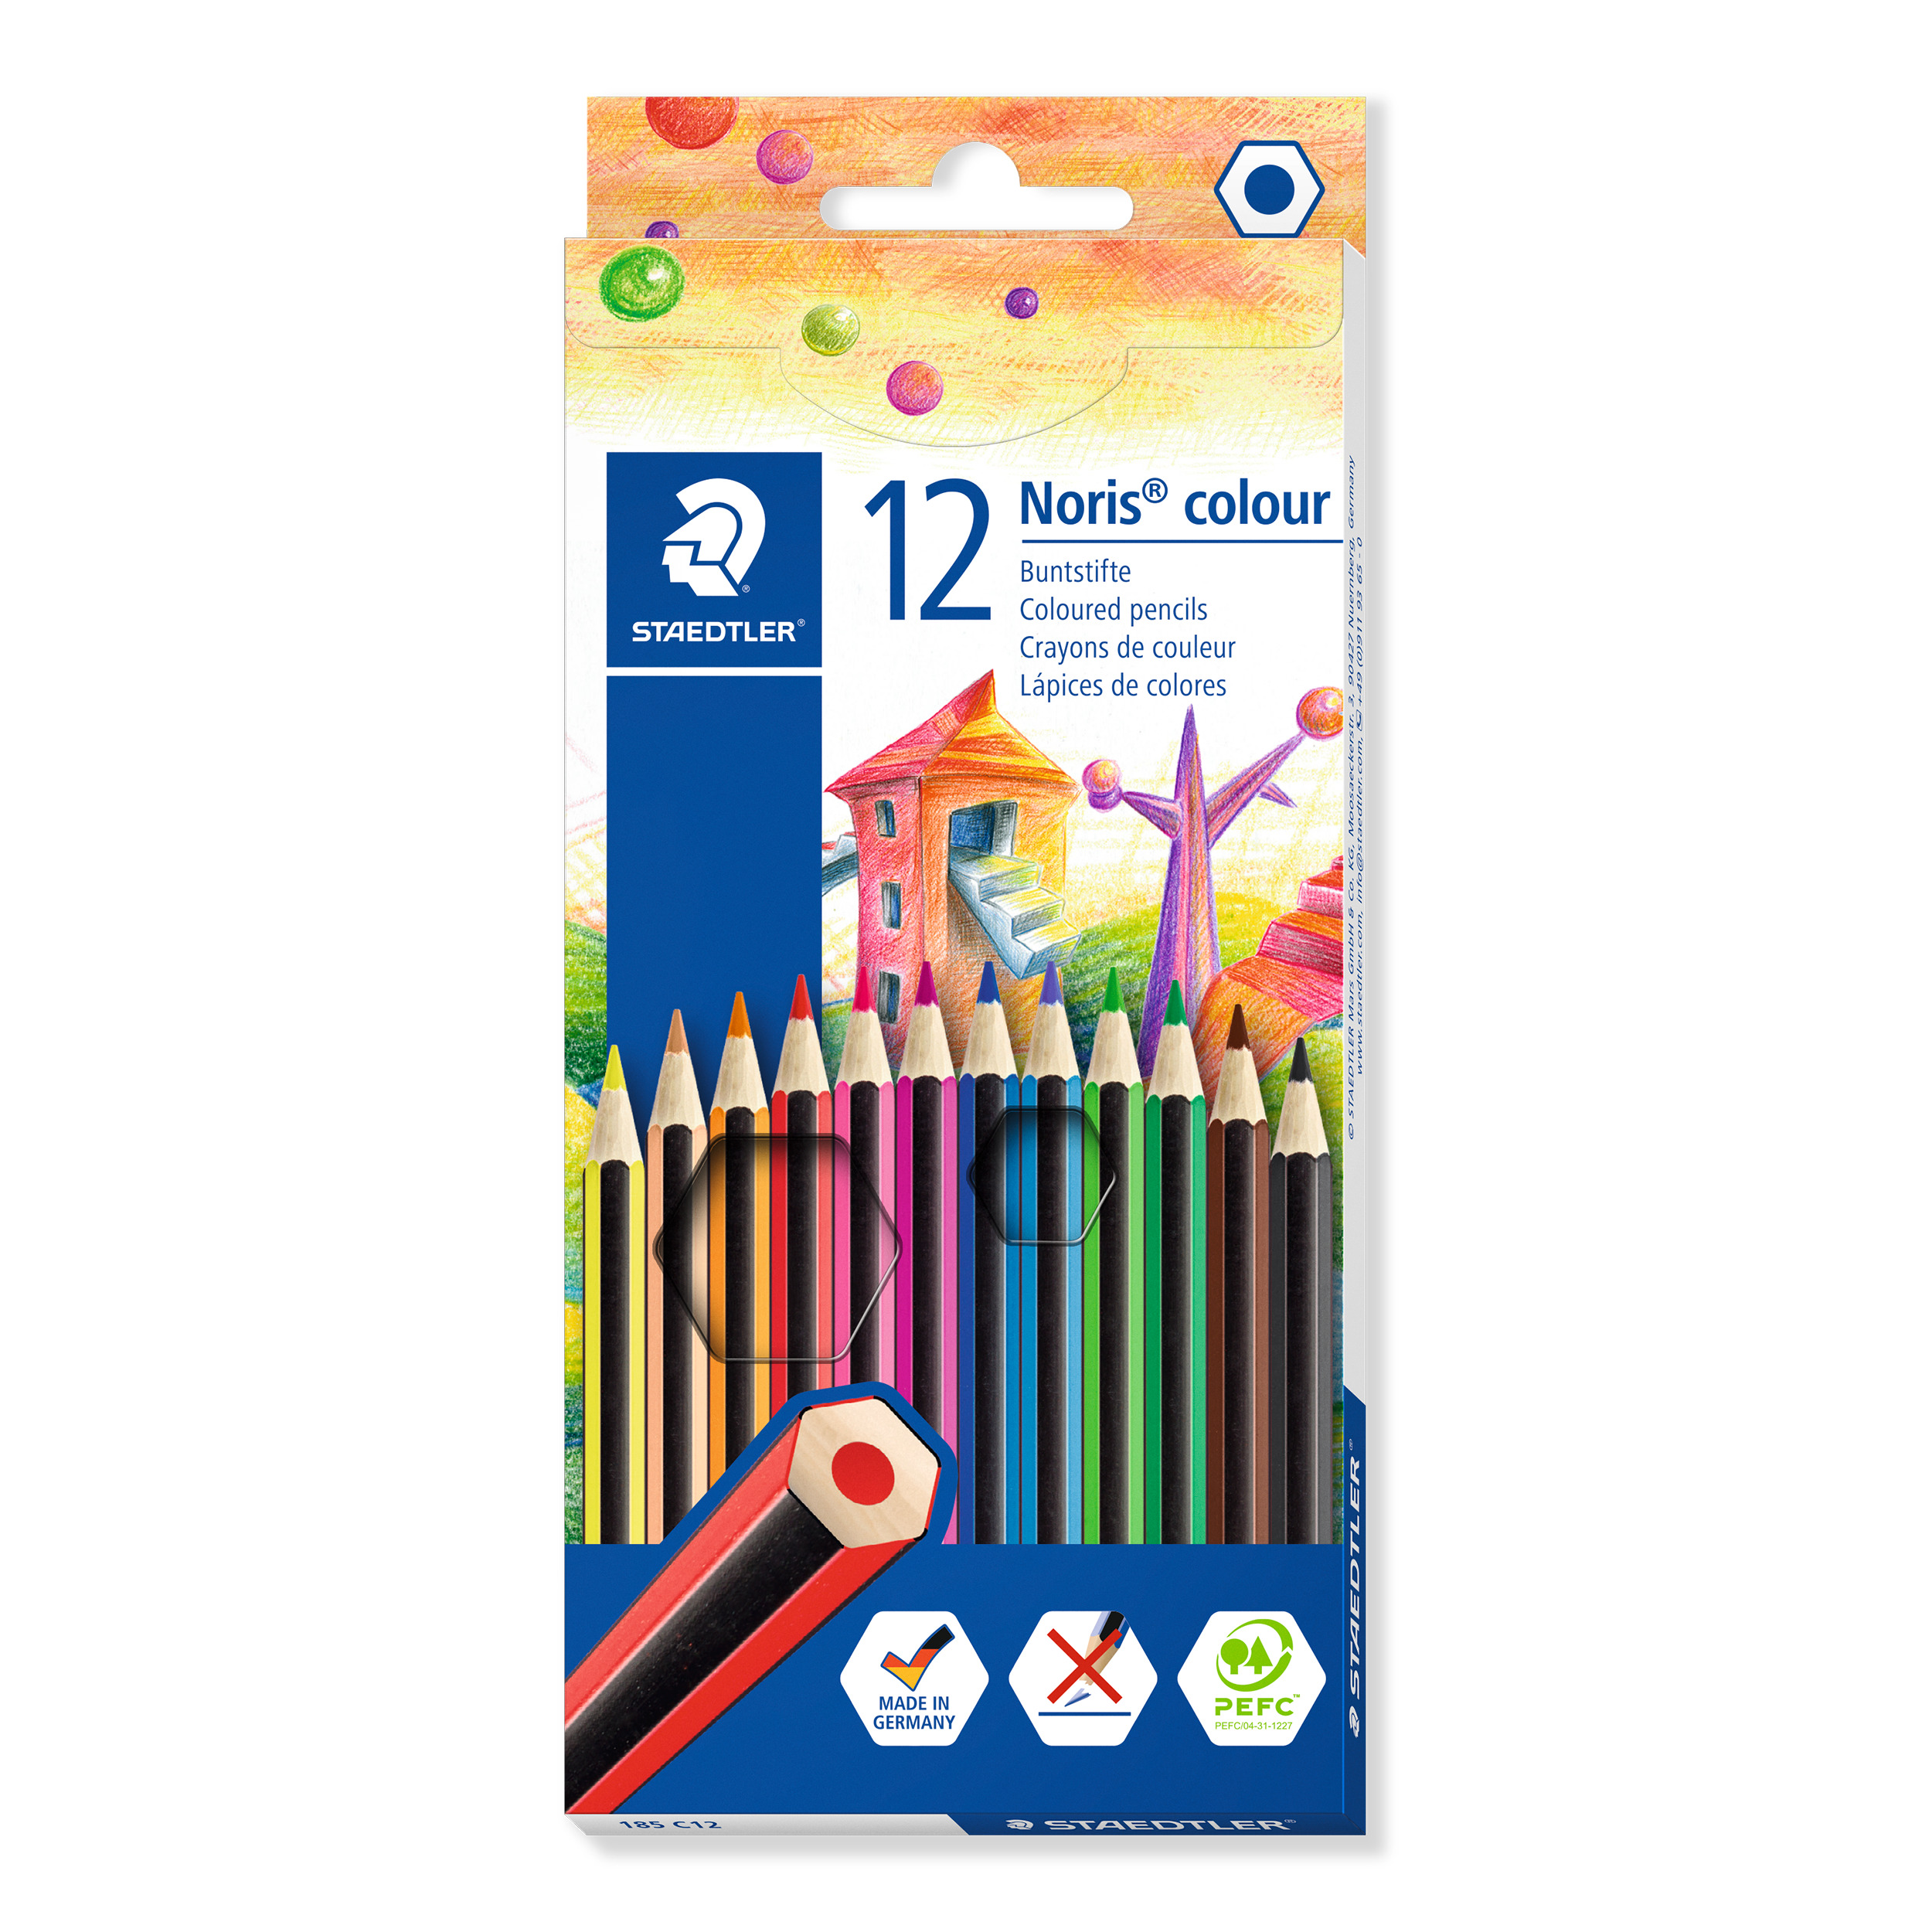 STAEDTLER Noris colour 185-43 Colouring Pencil Purple Pack of 12 